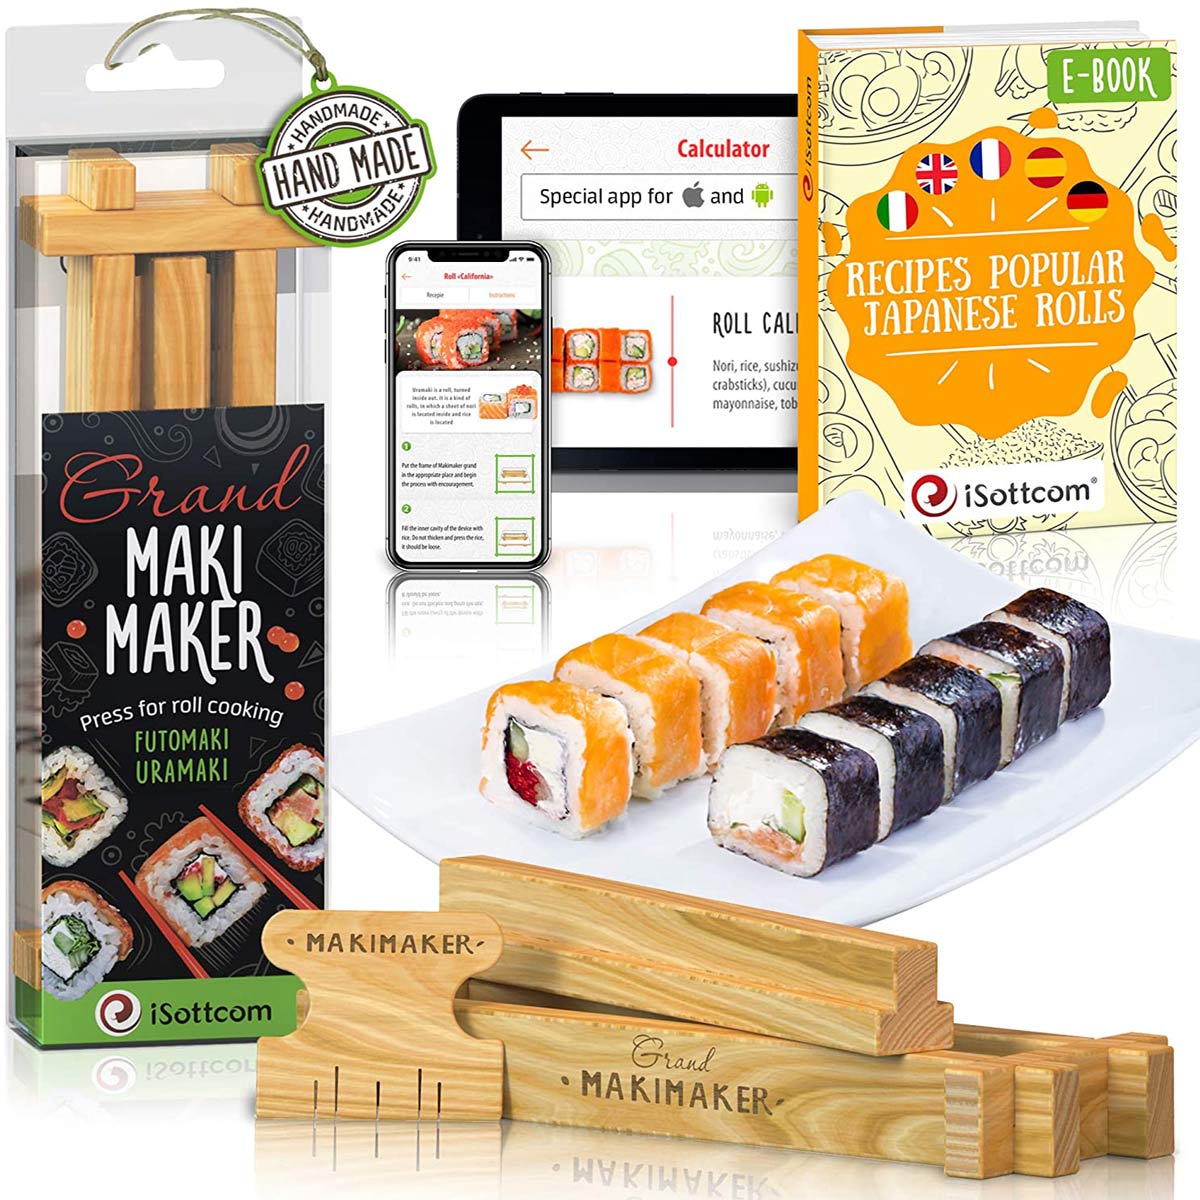 iSottcom Sushi-Making Kit | kinderleicht Sushi selbst machen!